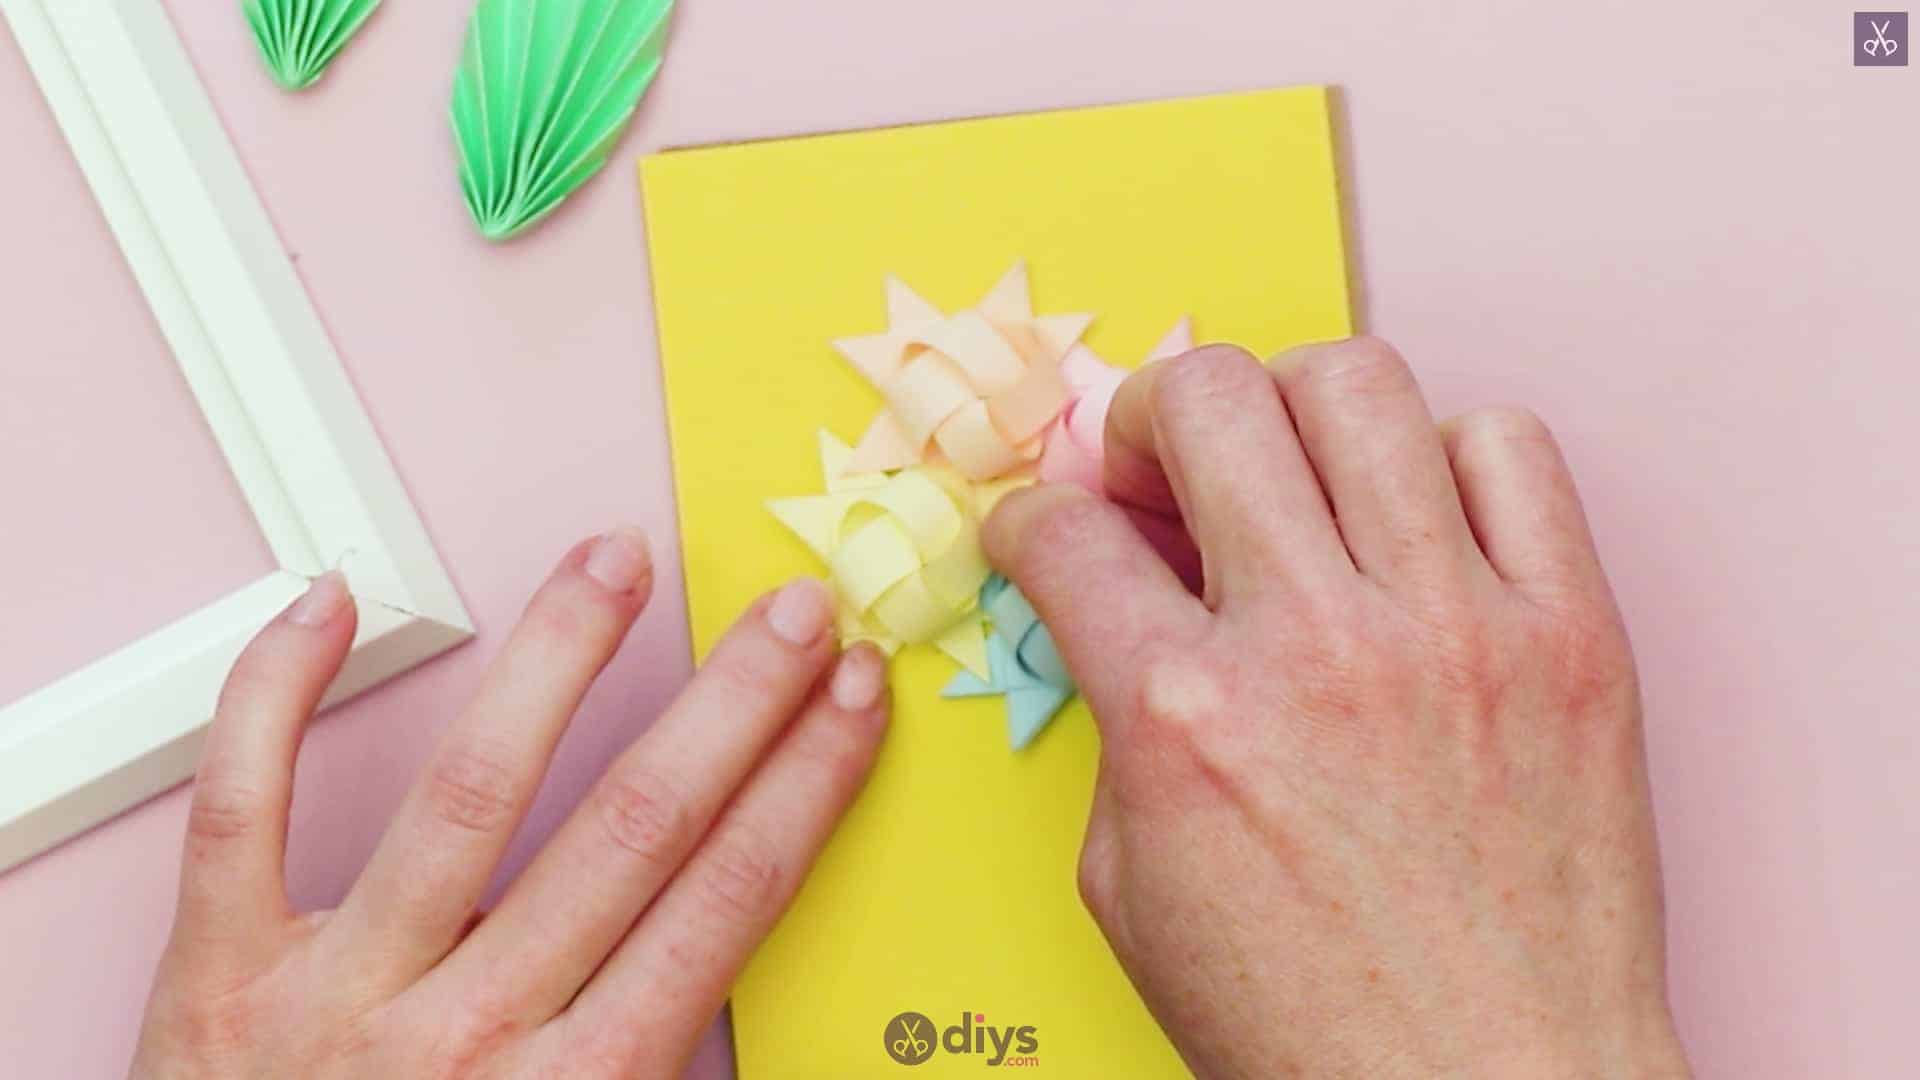 Diy origami flower art step 12d